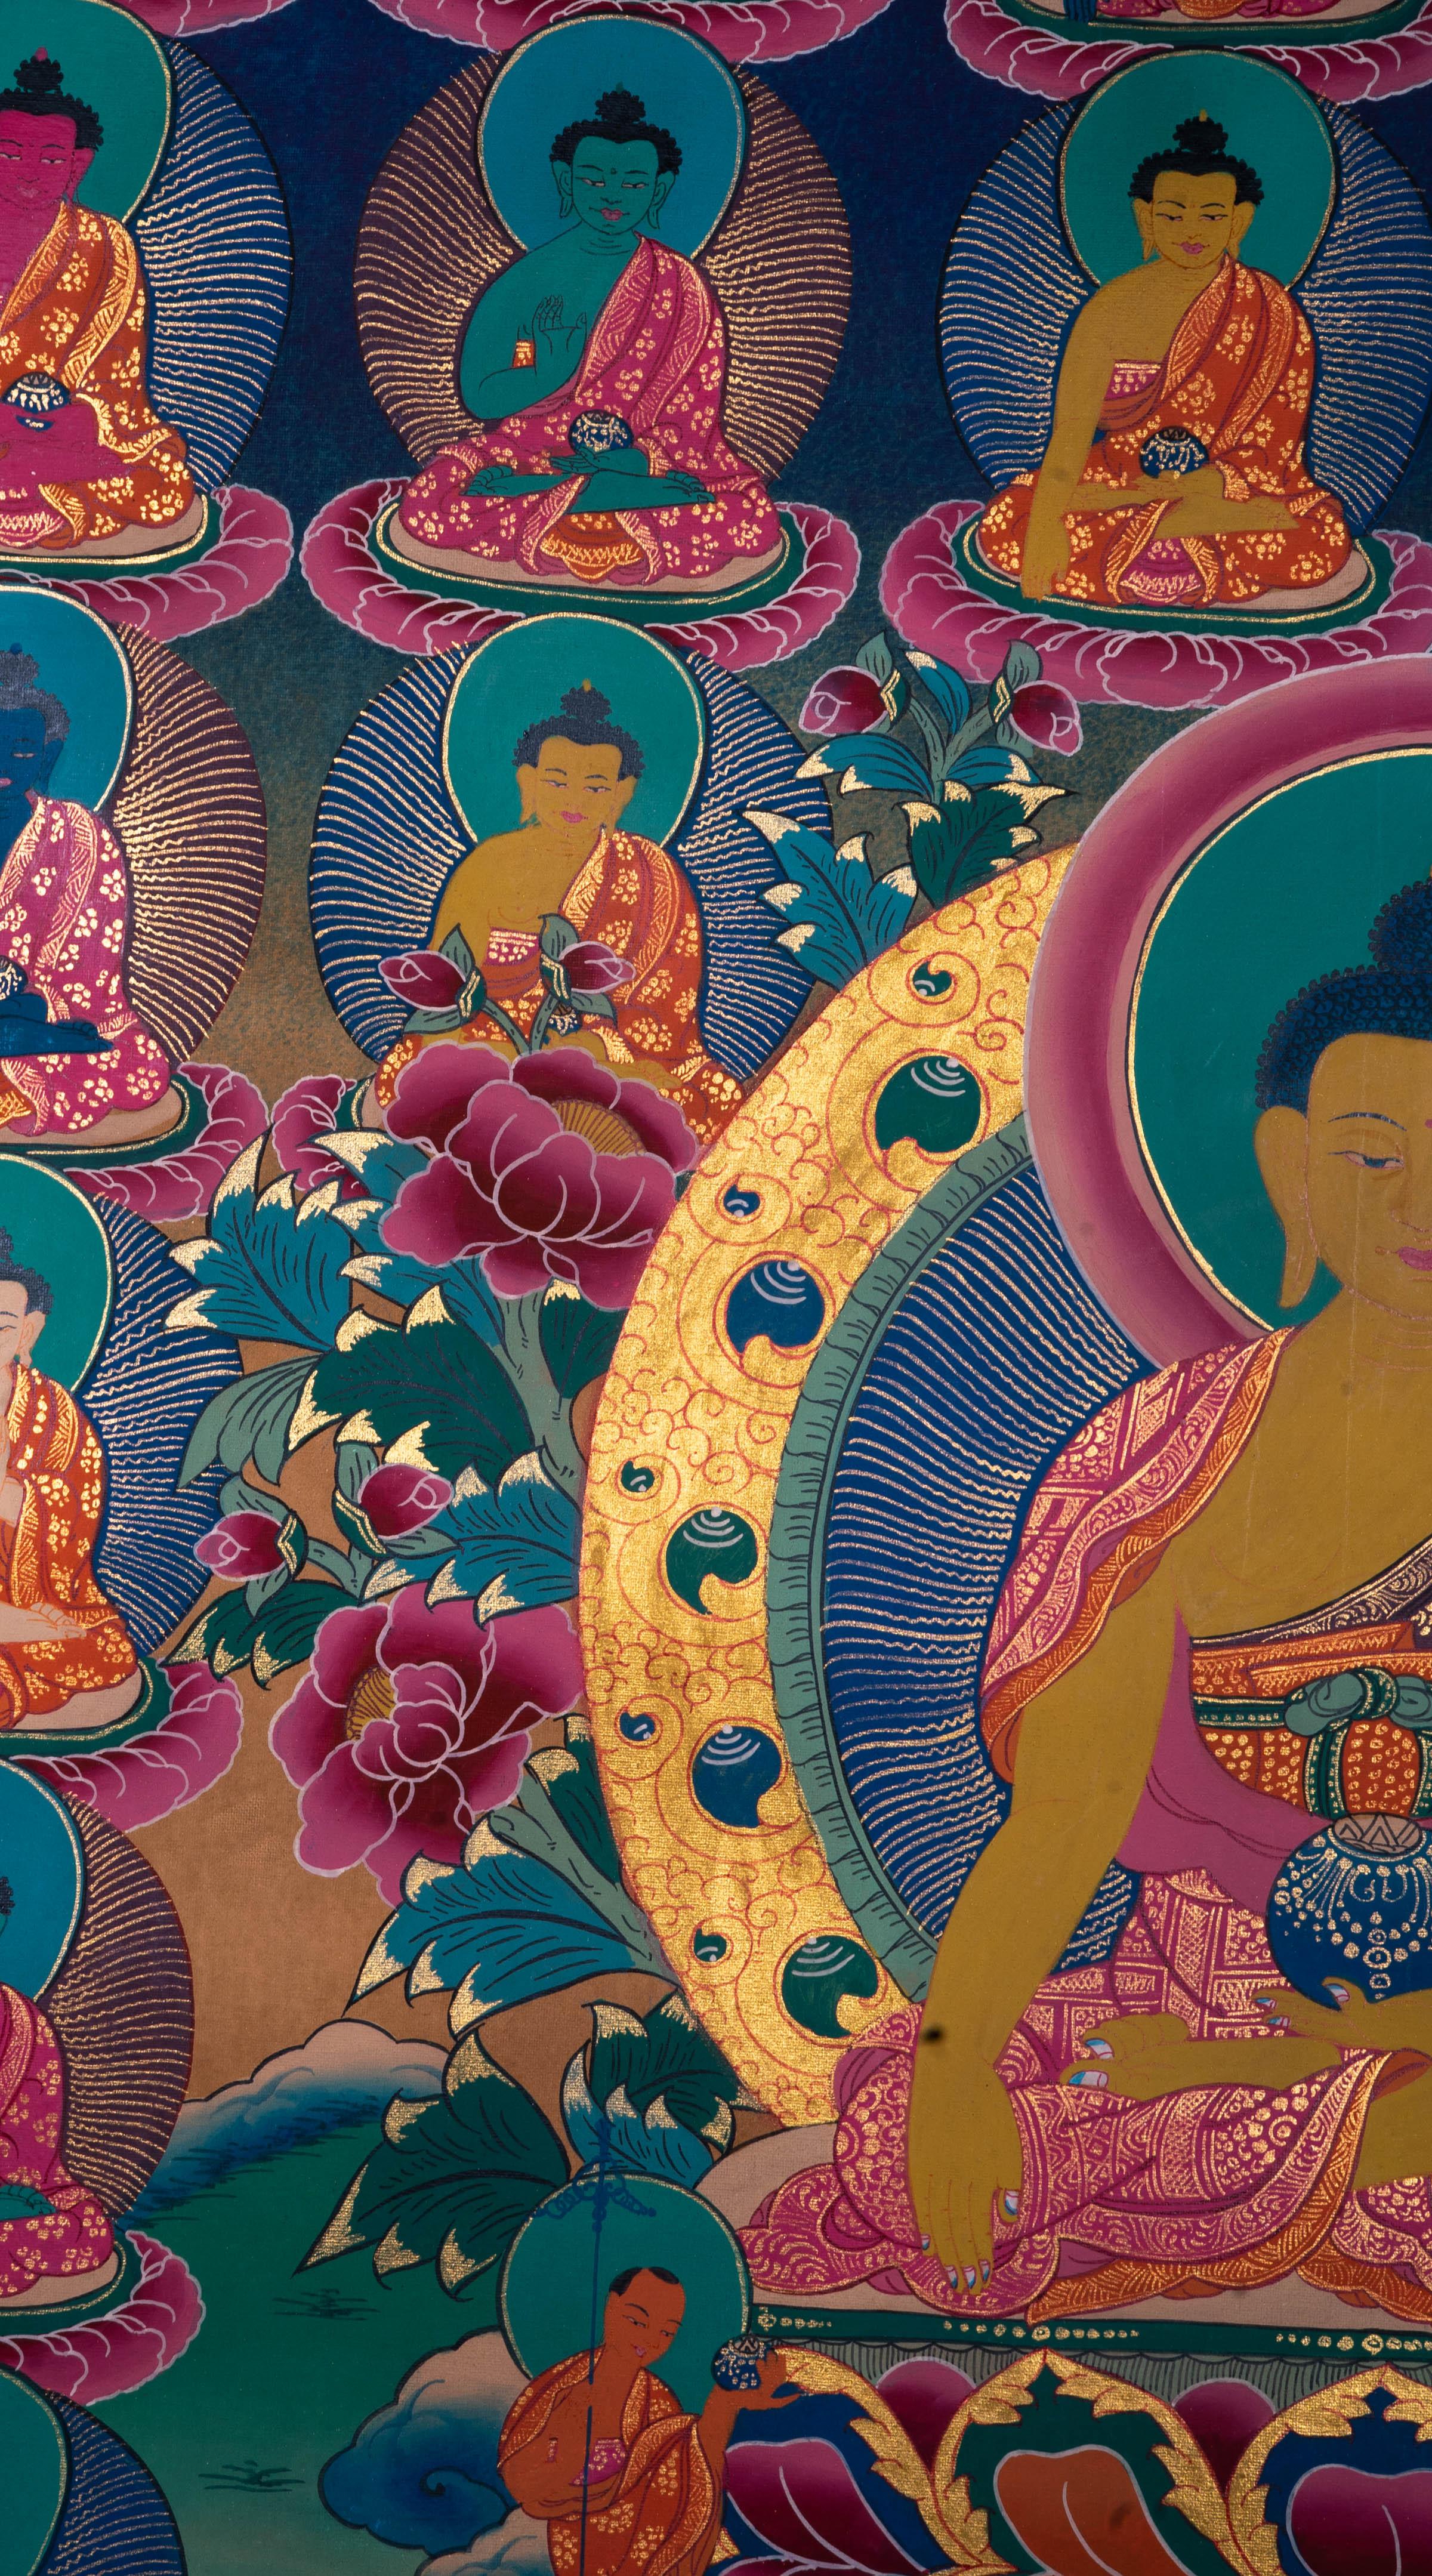 Handmade 35 Buddha Thangka Painting - Himalayas Shop